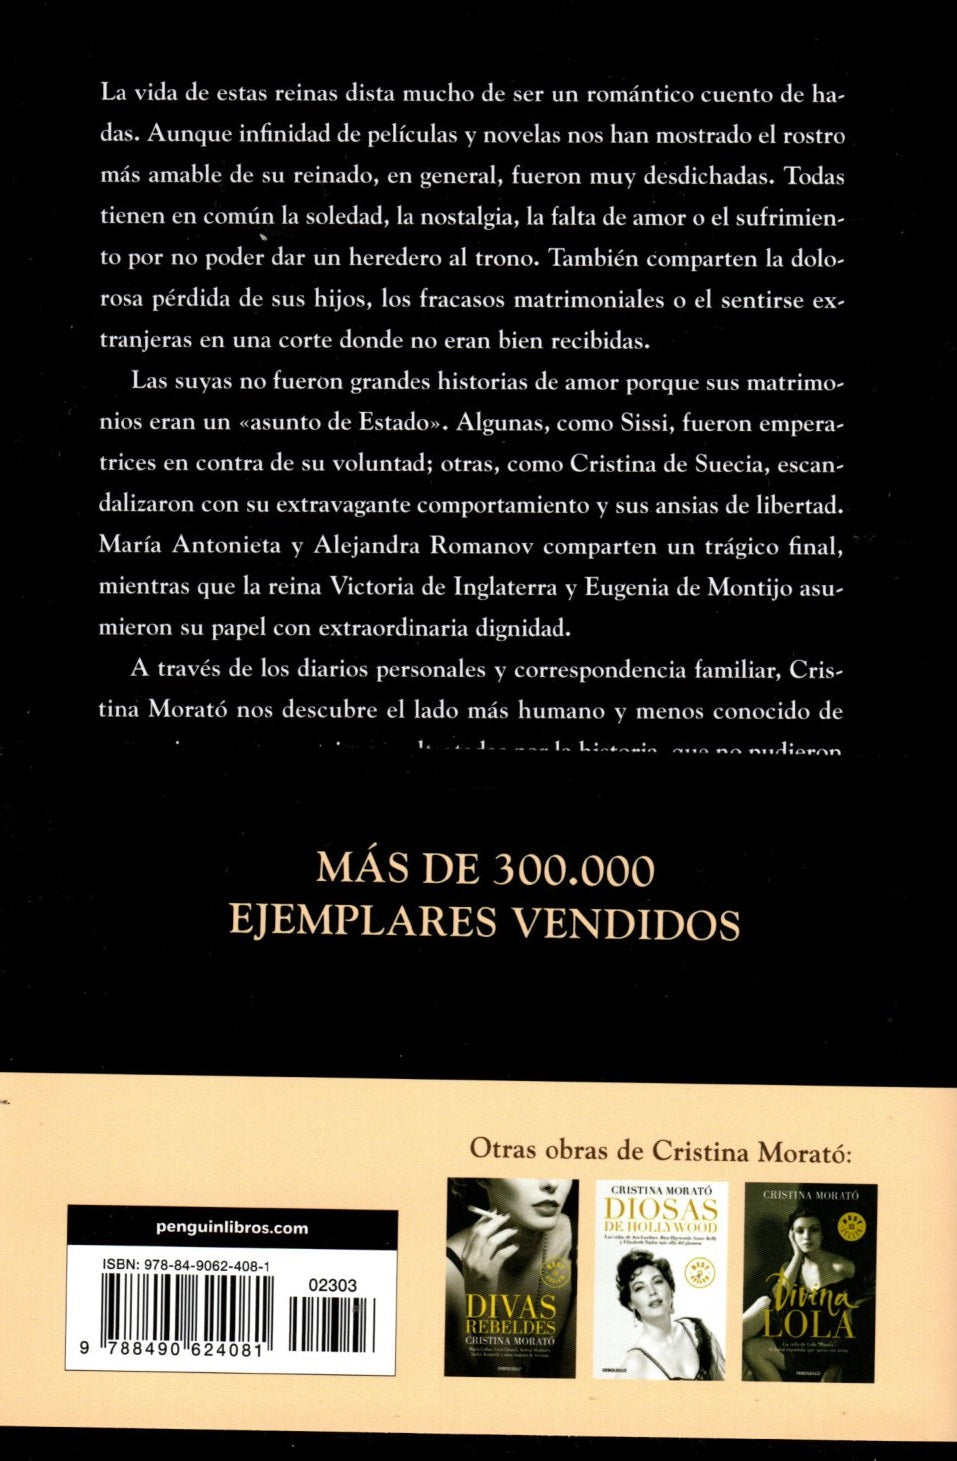 Libro Cristina Morató - Reinas malditas